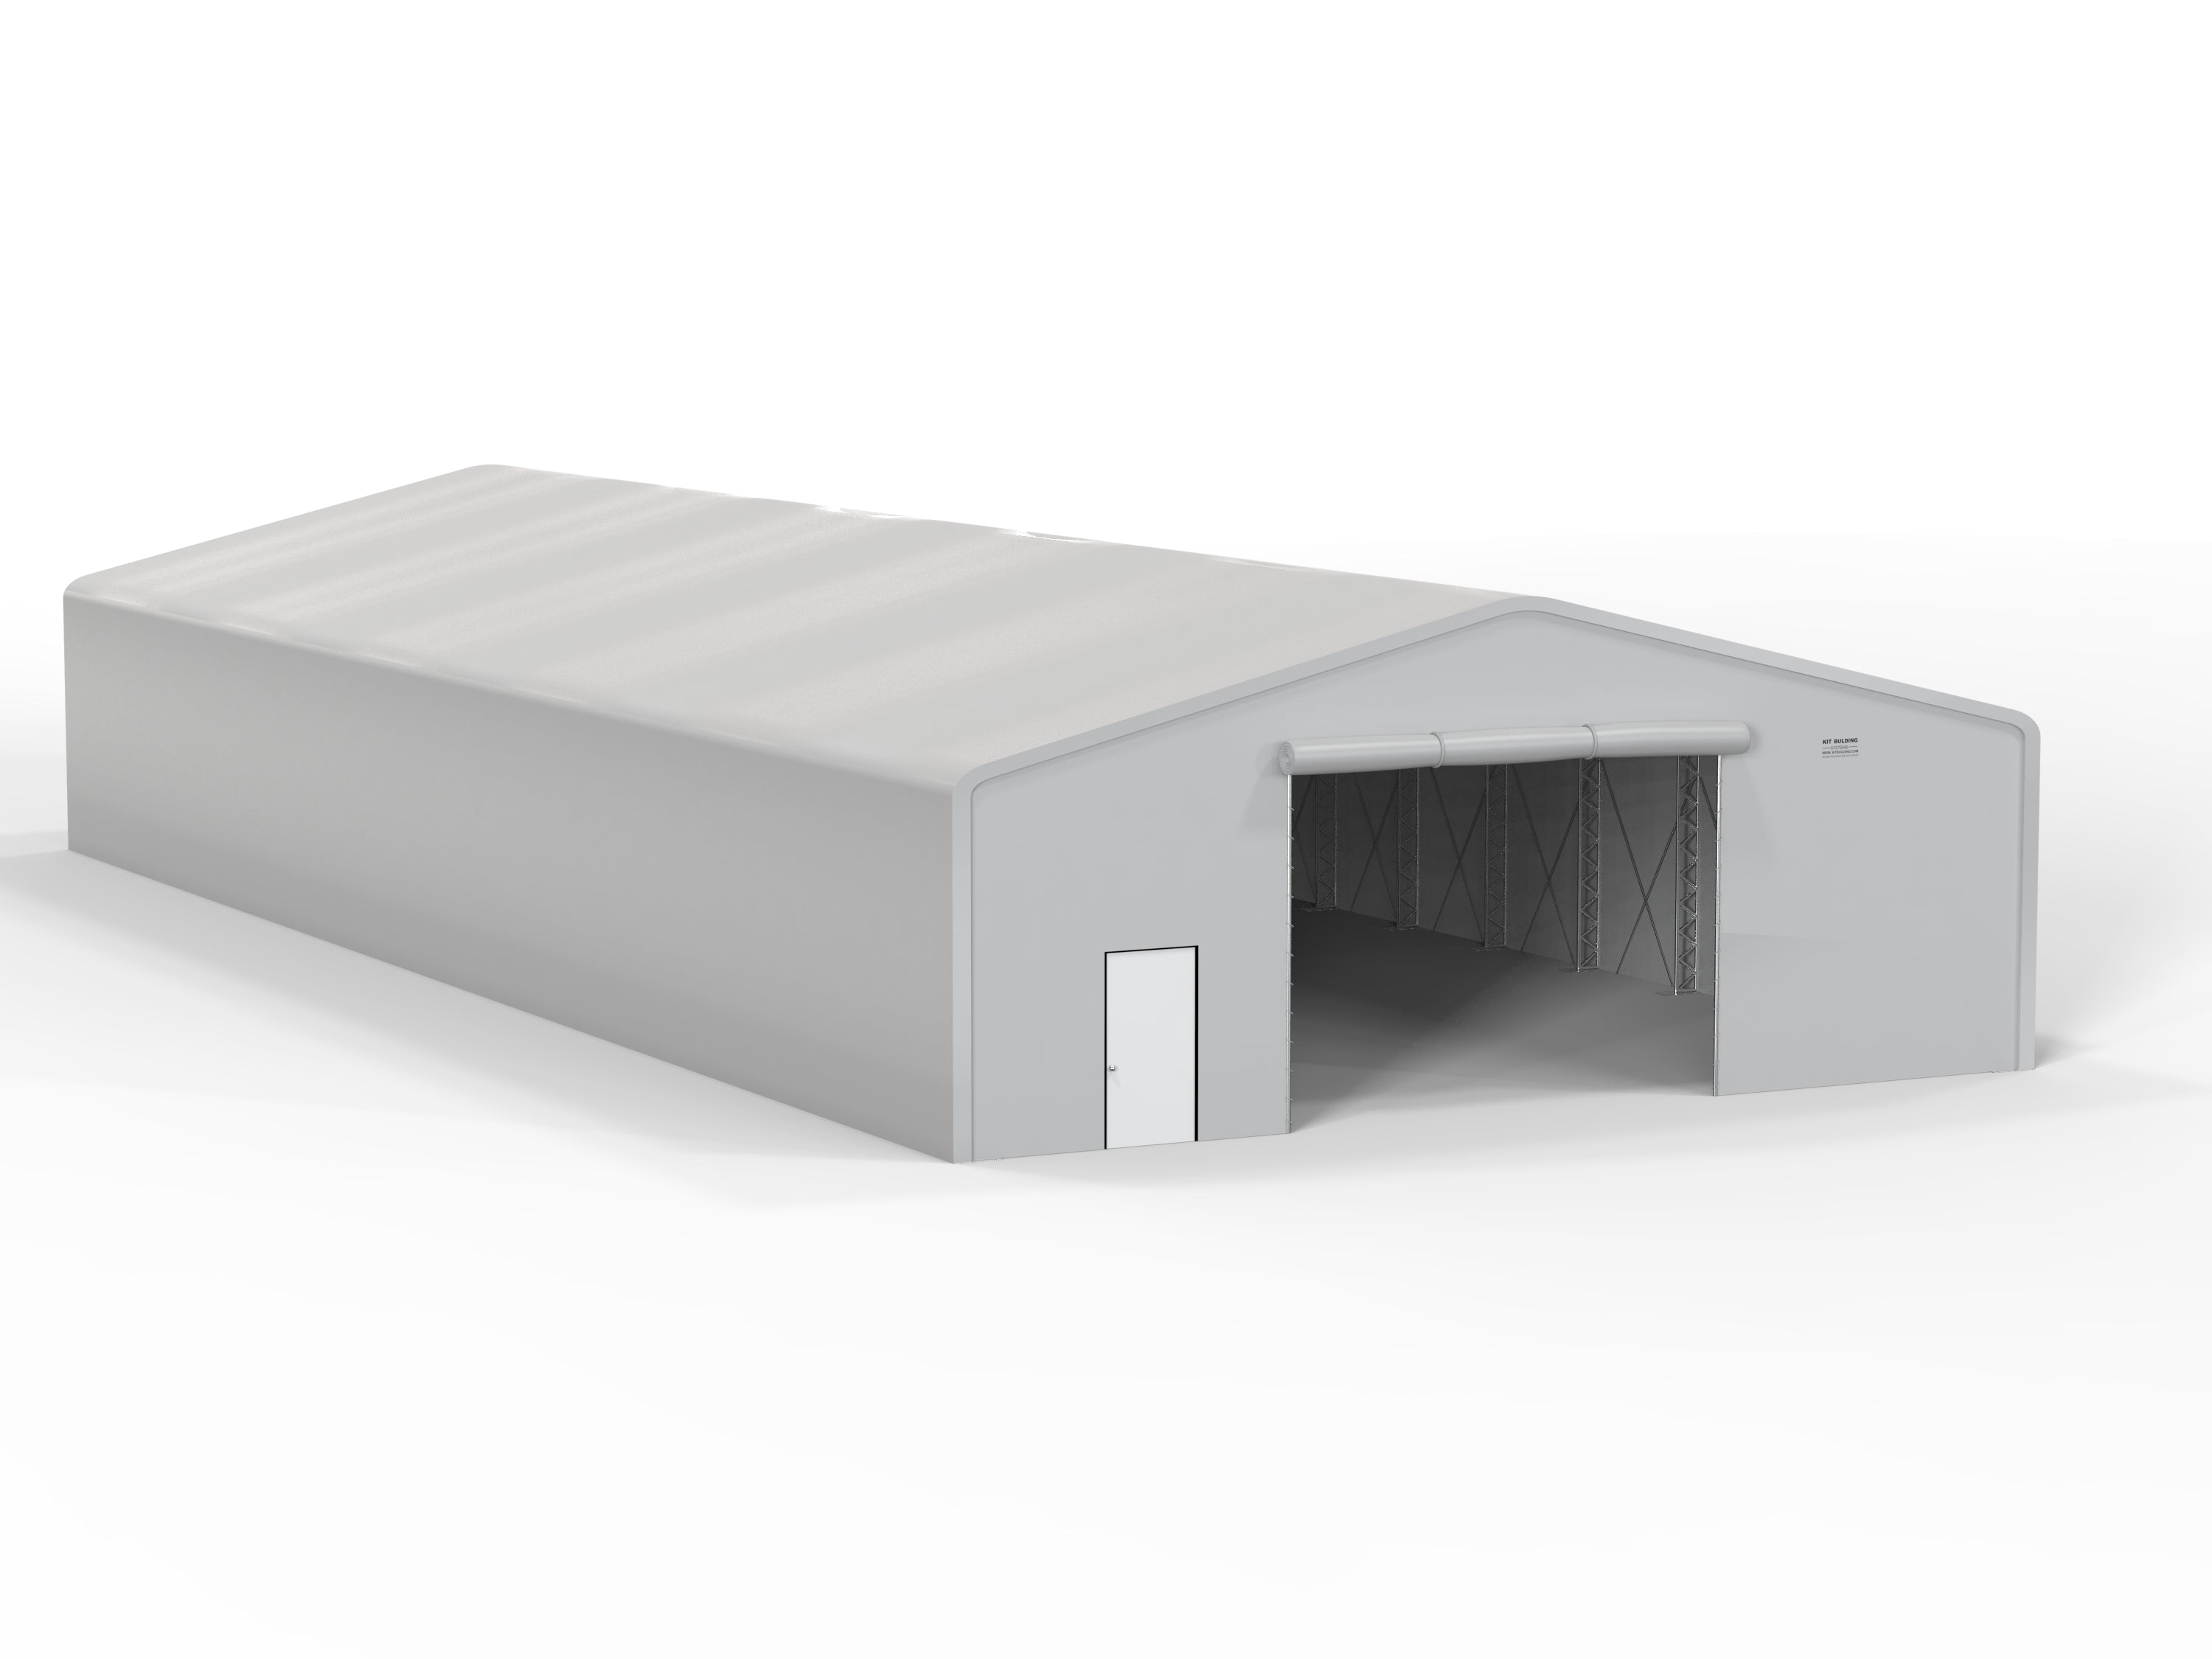 Double Truss PVC temporary storage building - Grey - Manual Roll up Door